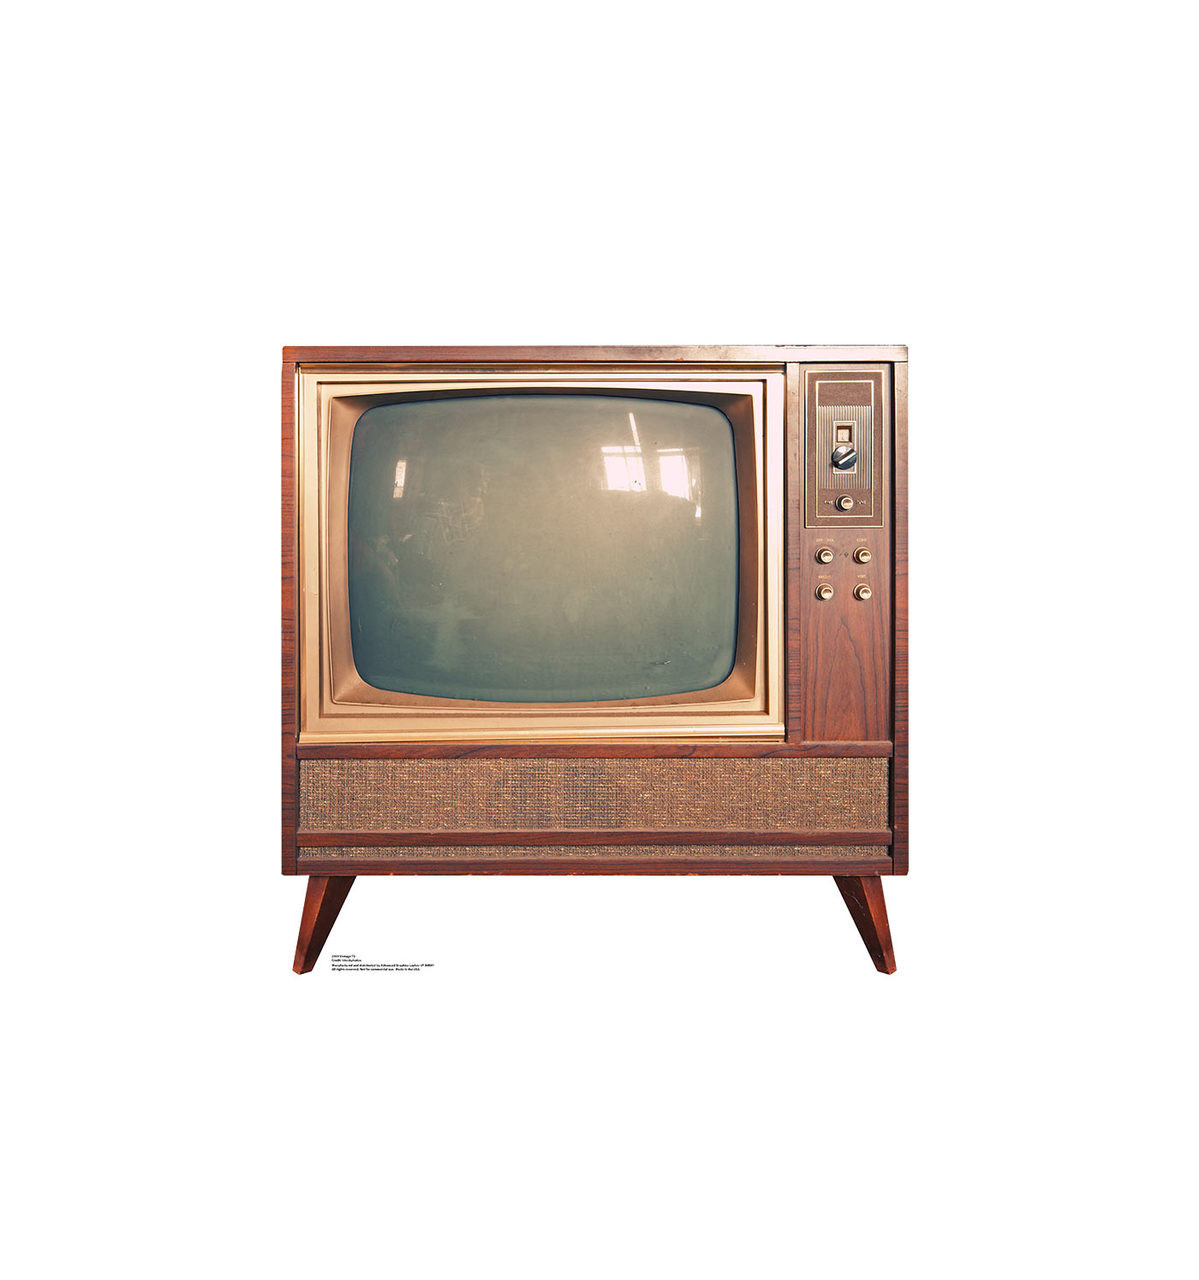 Life-size Vintage TV Cardboard Cutout Standee